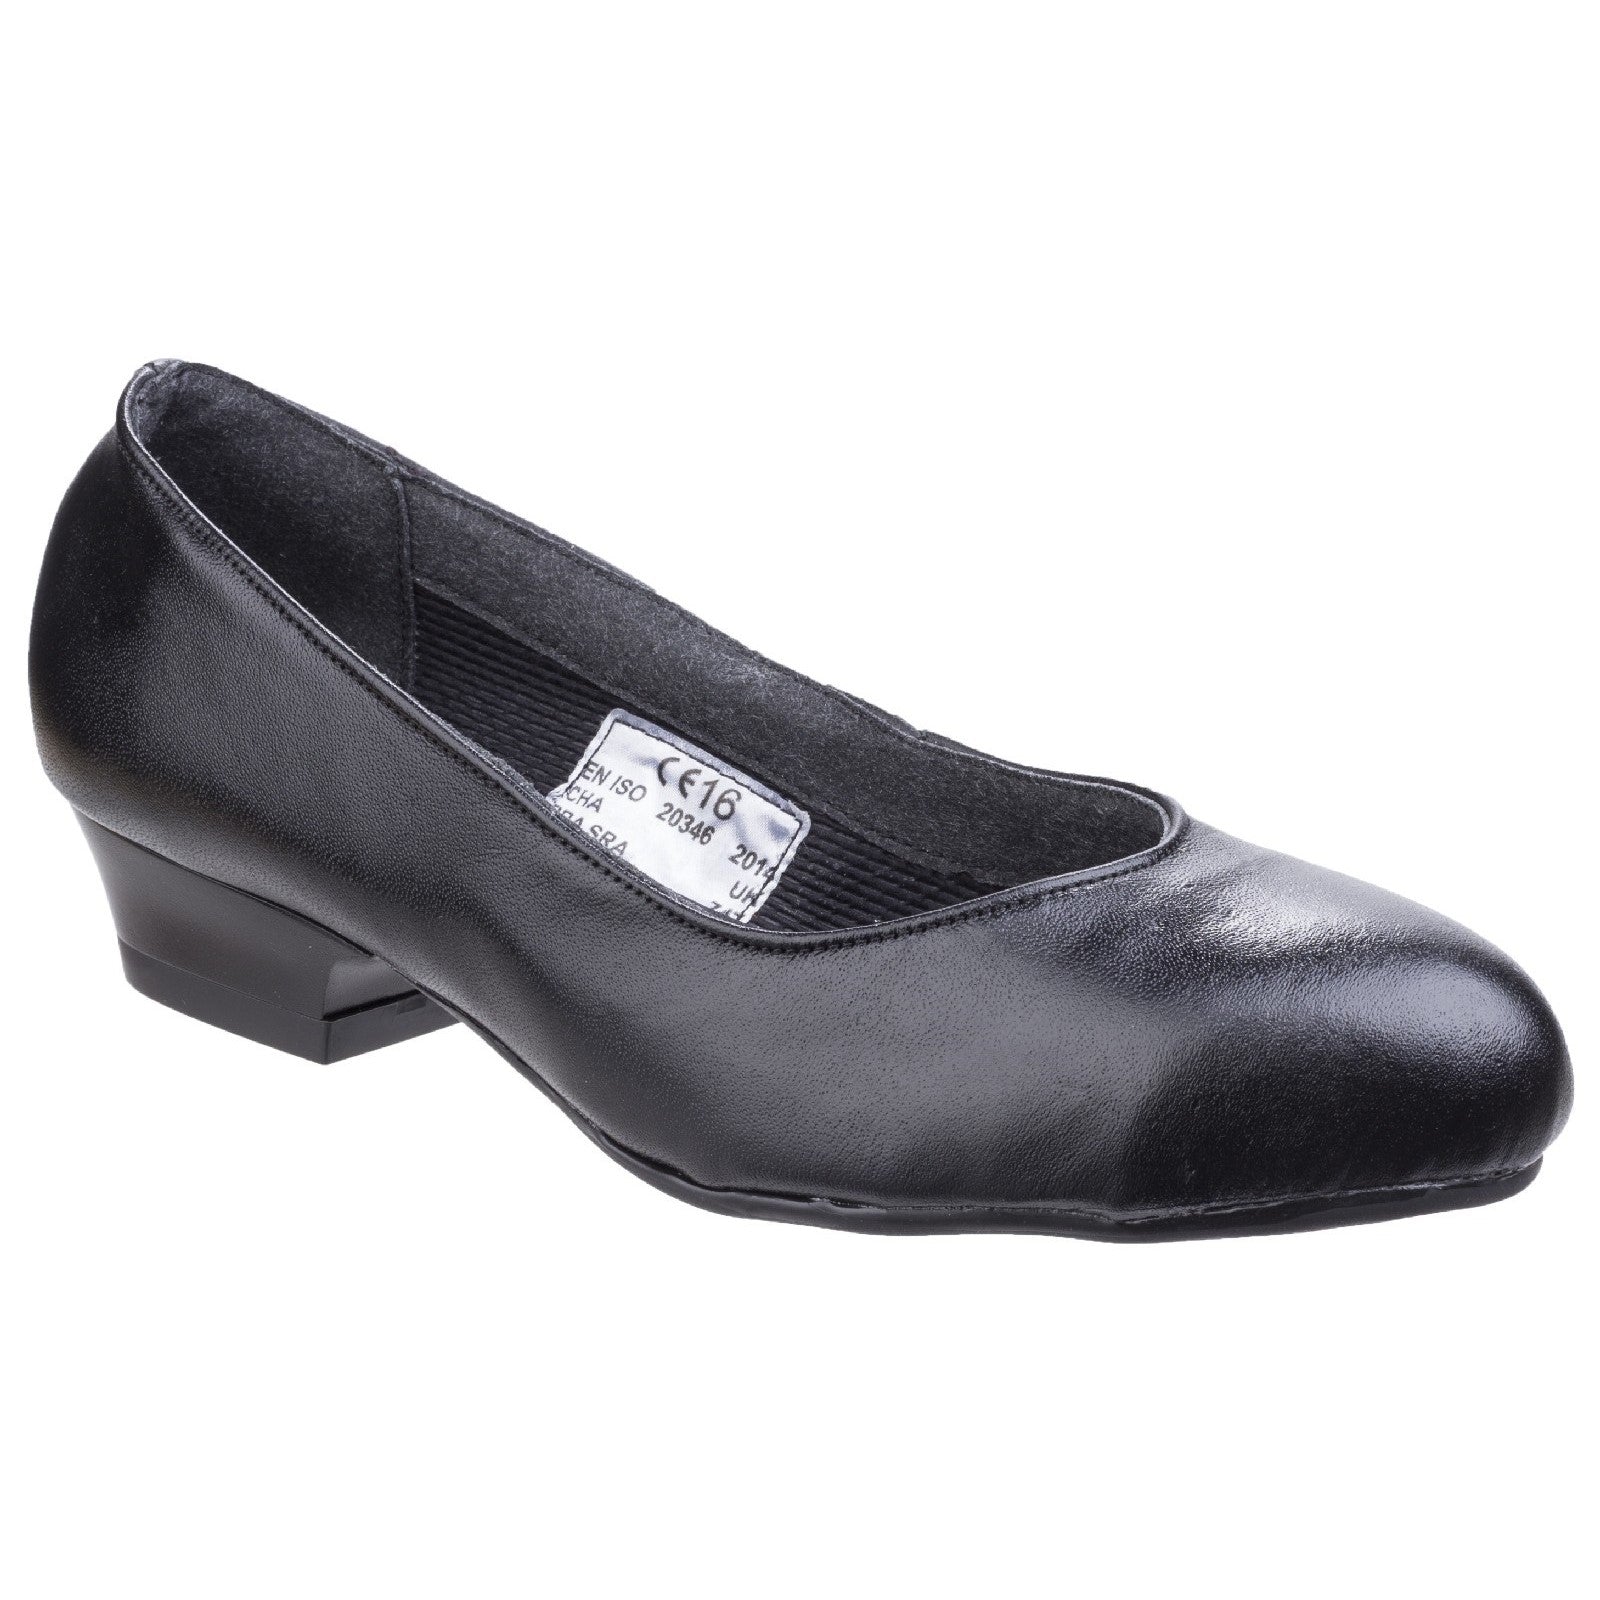 Amblers FS96 Women’s Safety Court Shoe